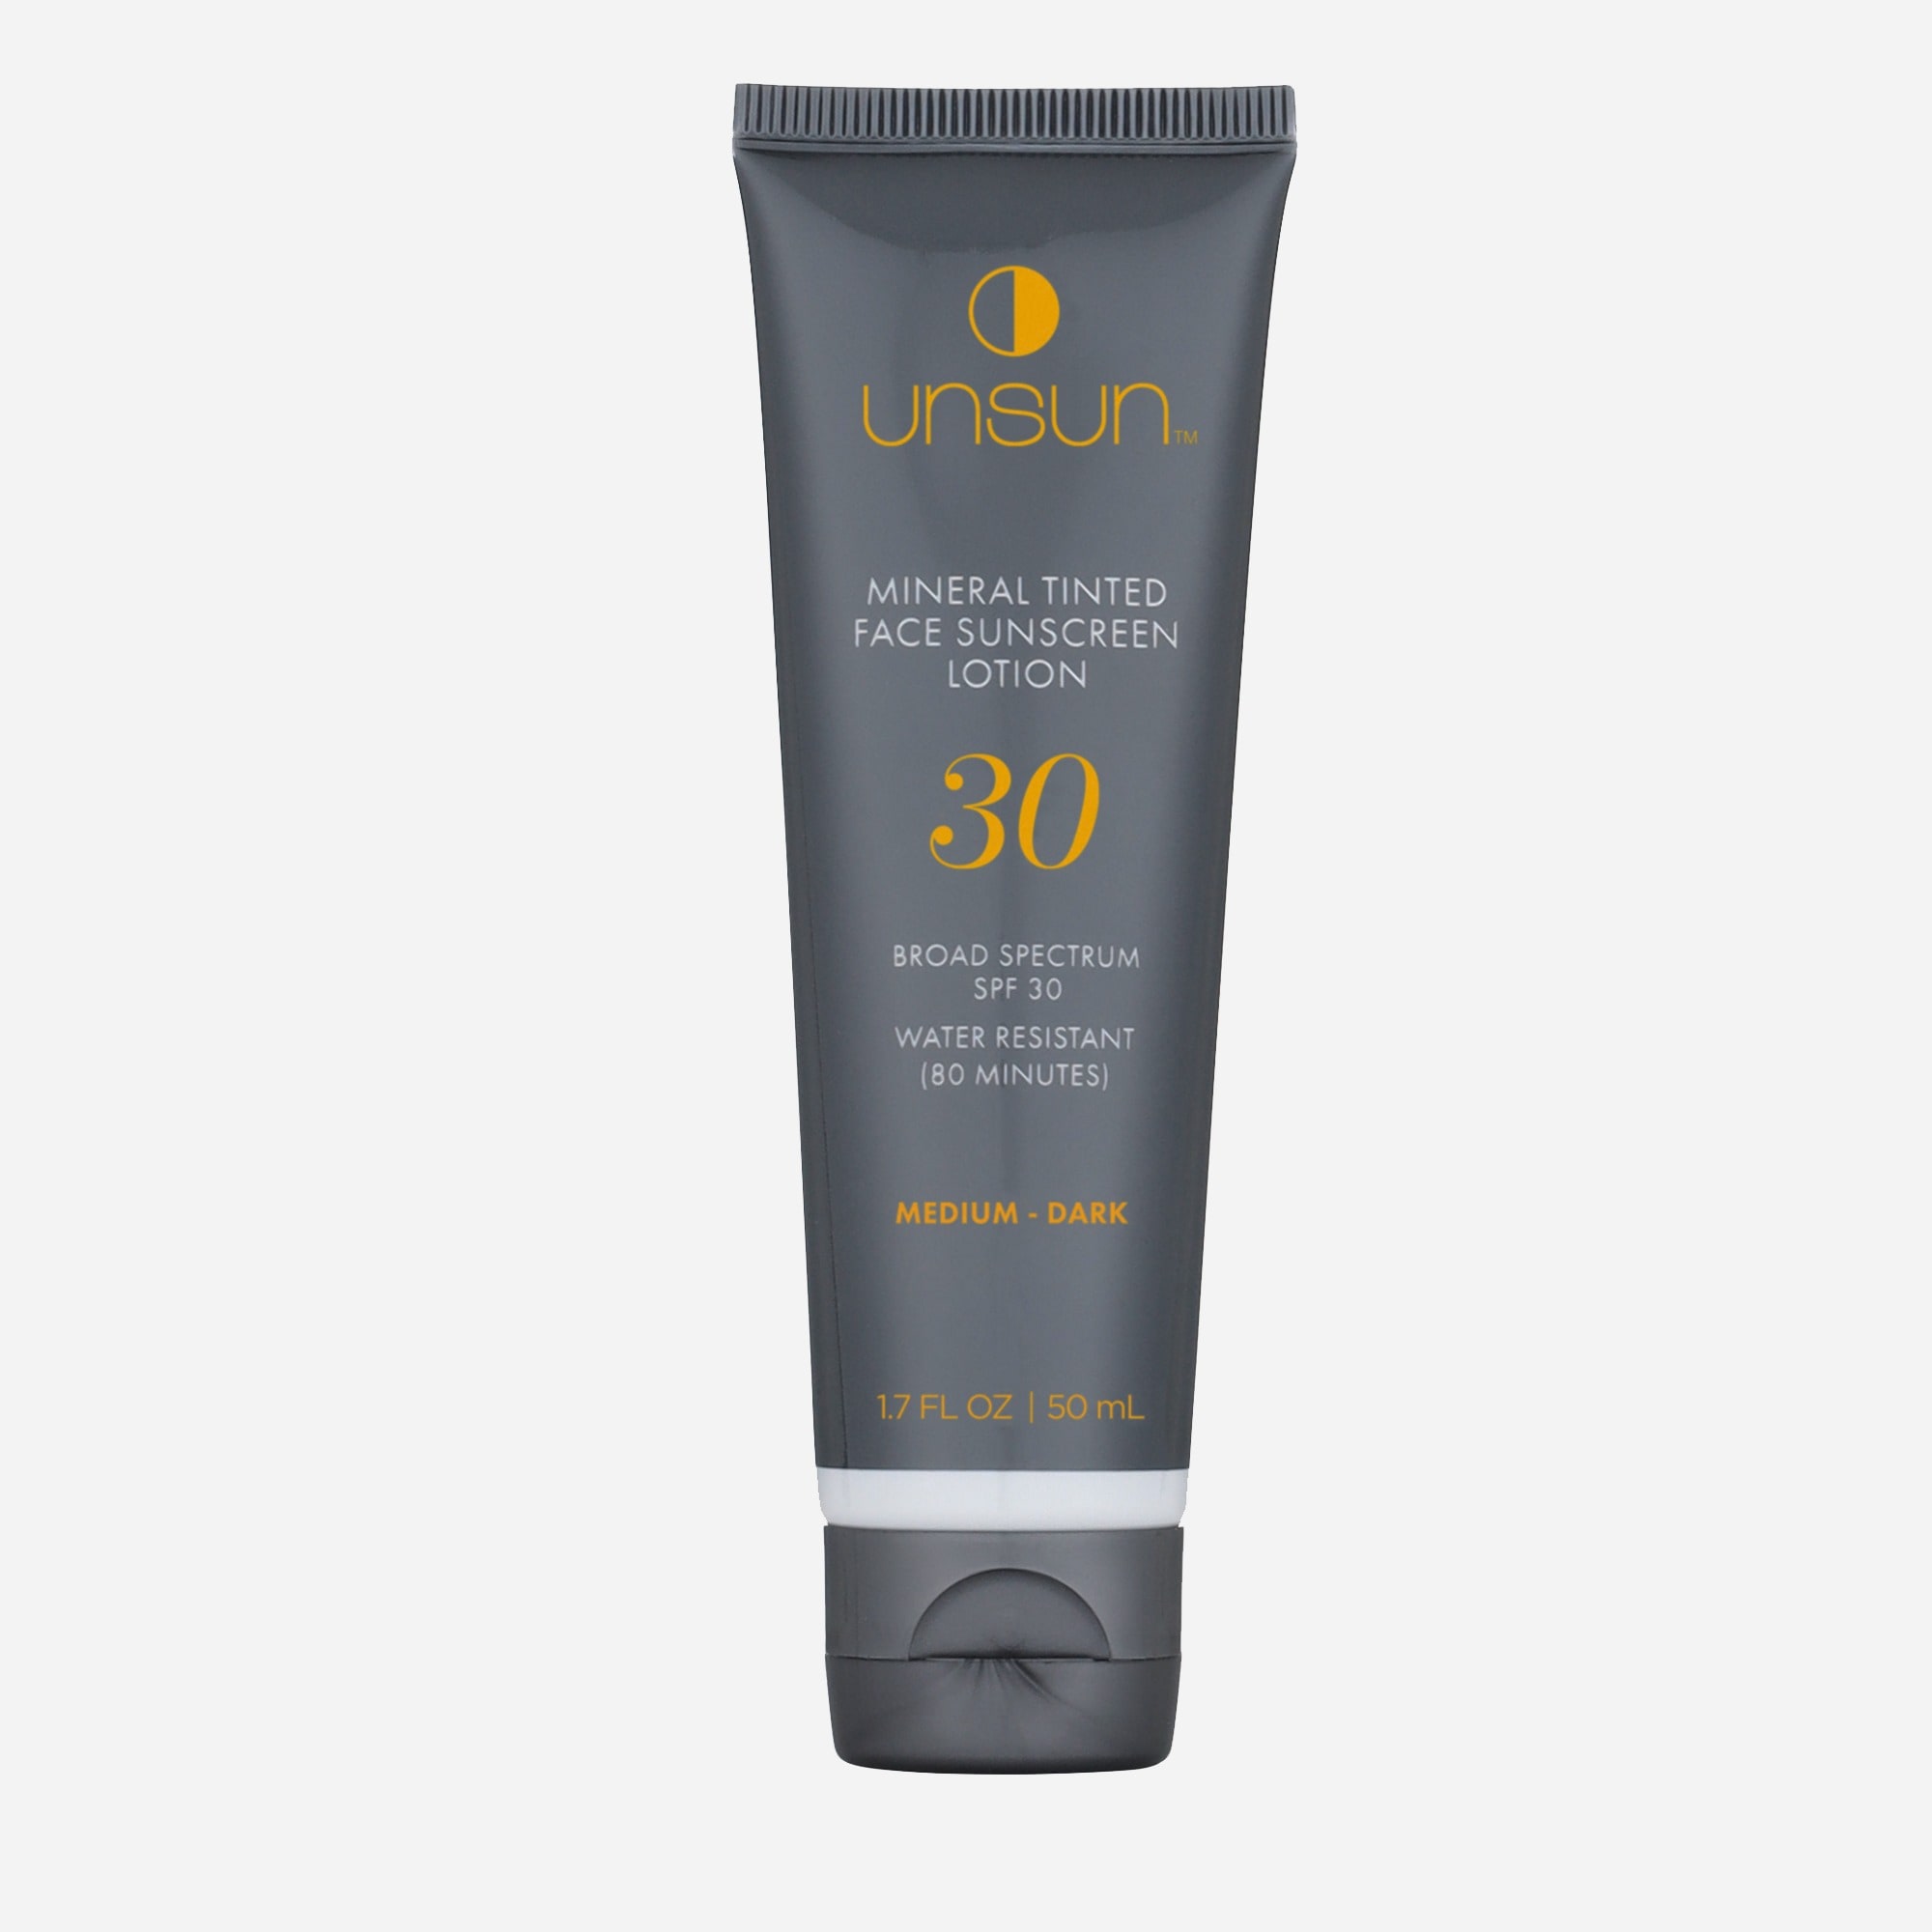  Unsun Cosmetics™ mineral tinted face sunscreen lotion SPF 30 in "medium/dark"